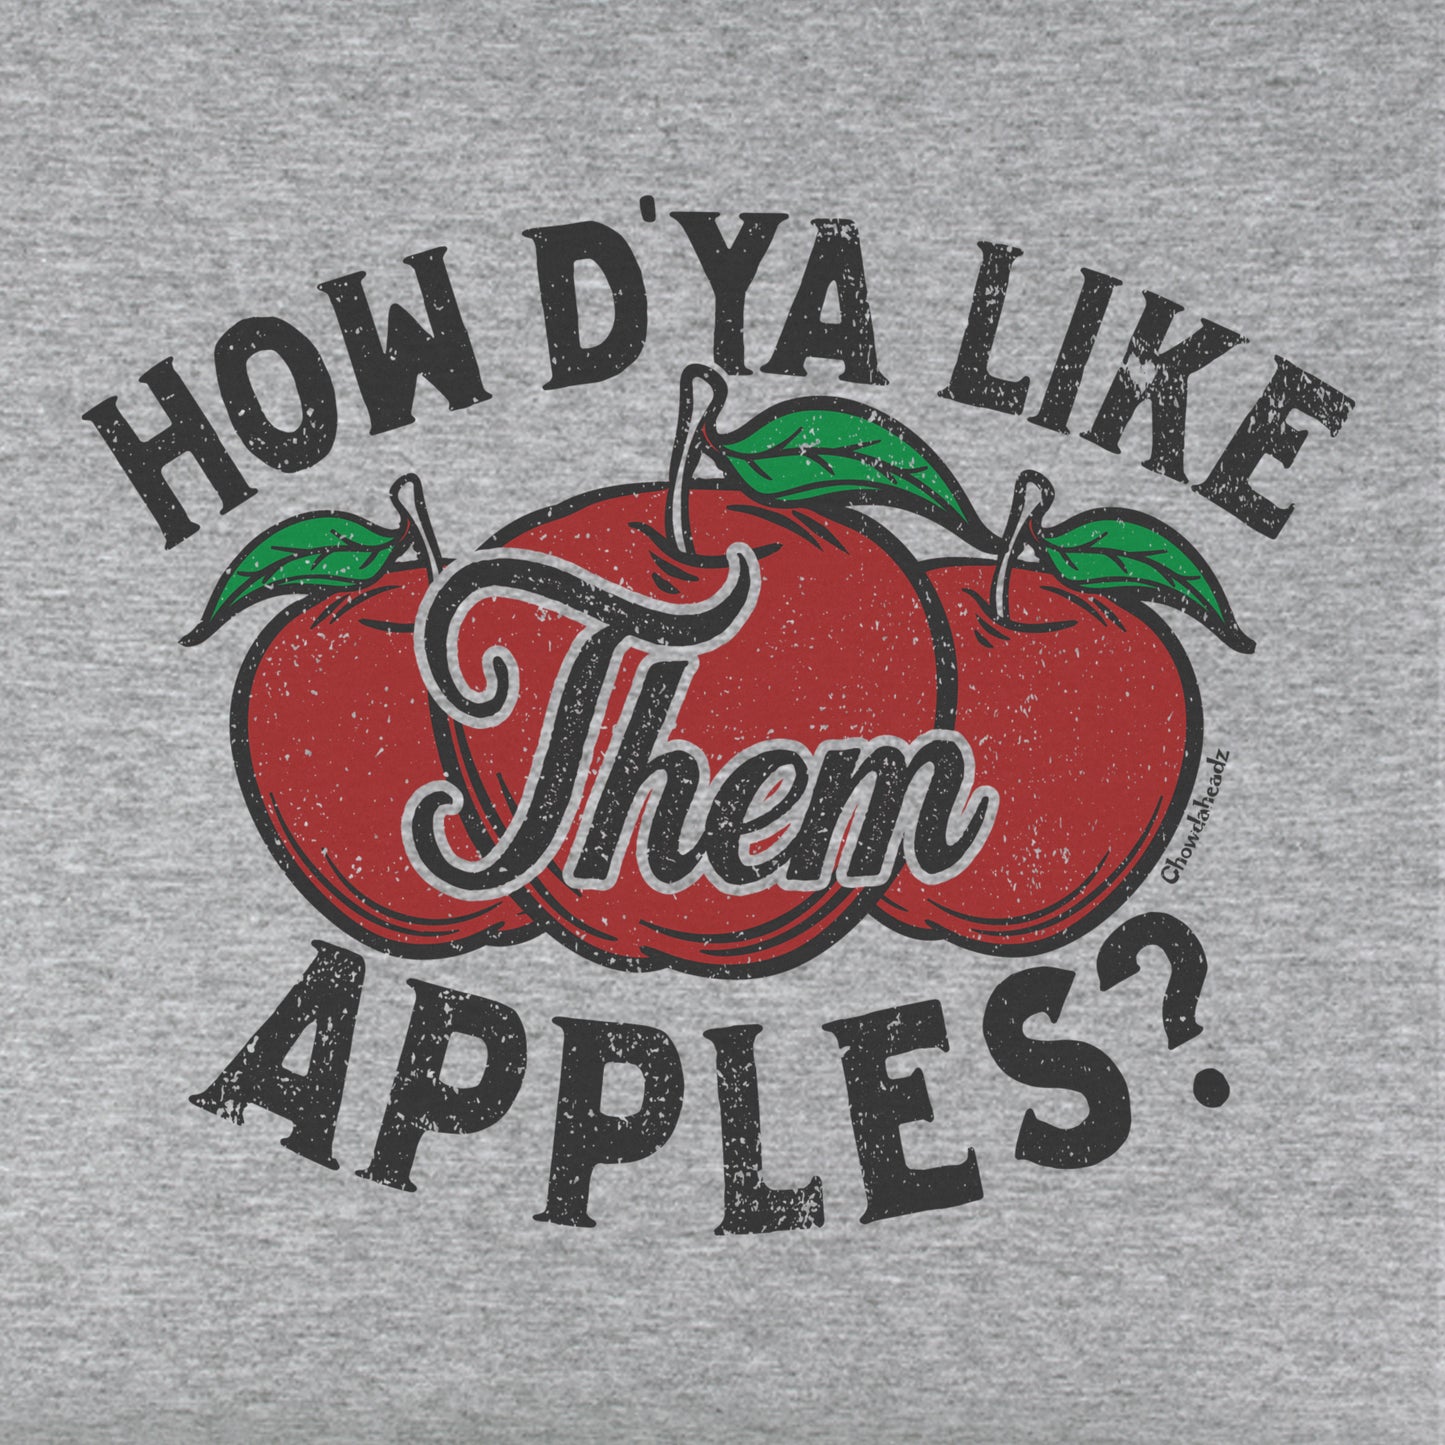 How D'ya Like Them Apples Youth T-Shirt - Chowdaheadz